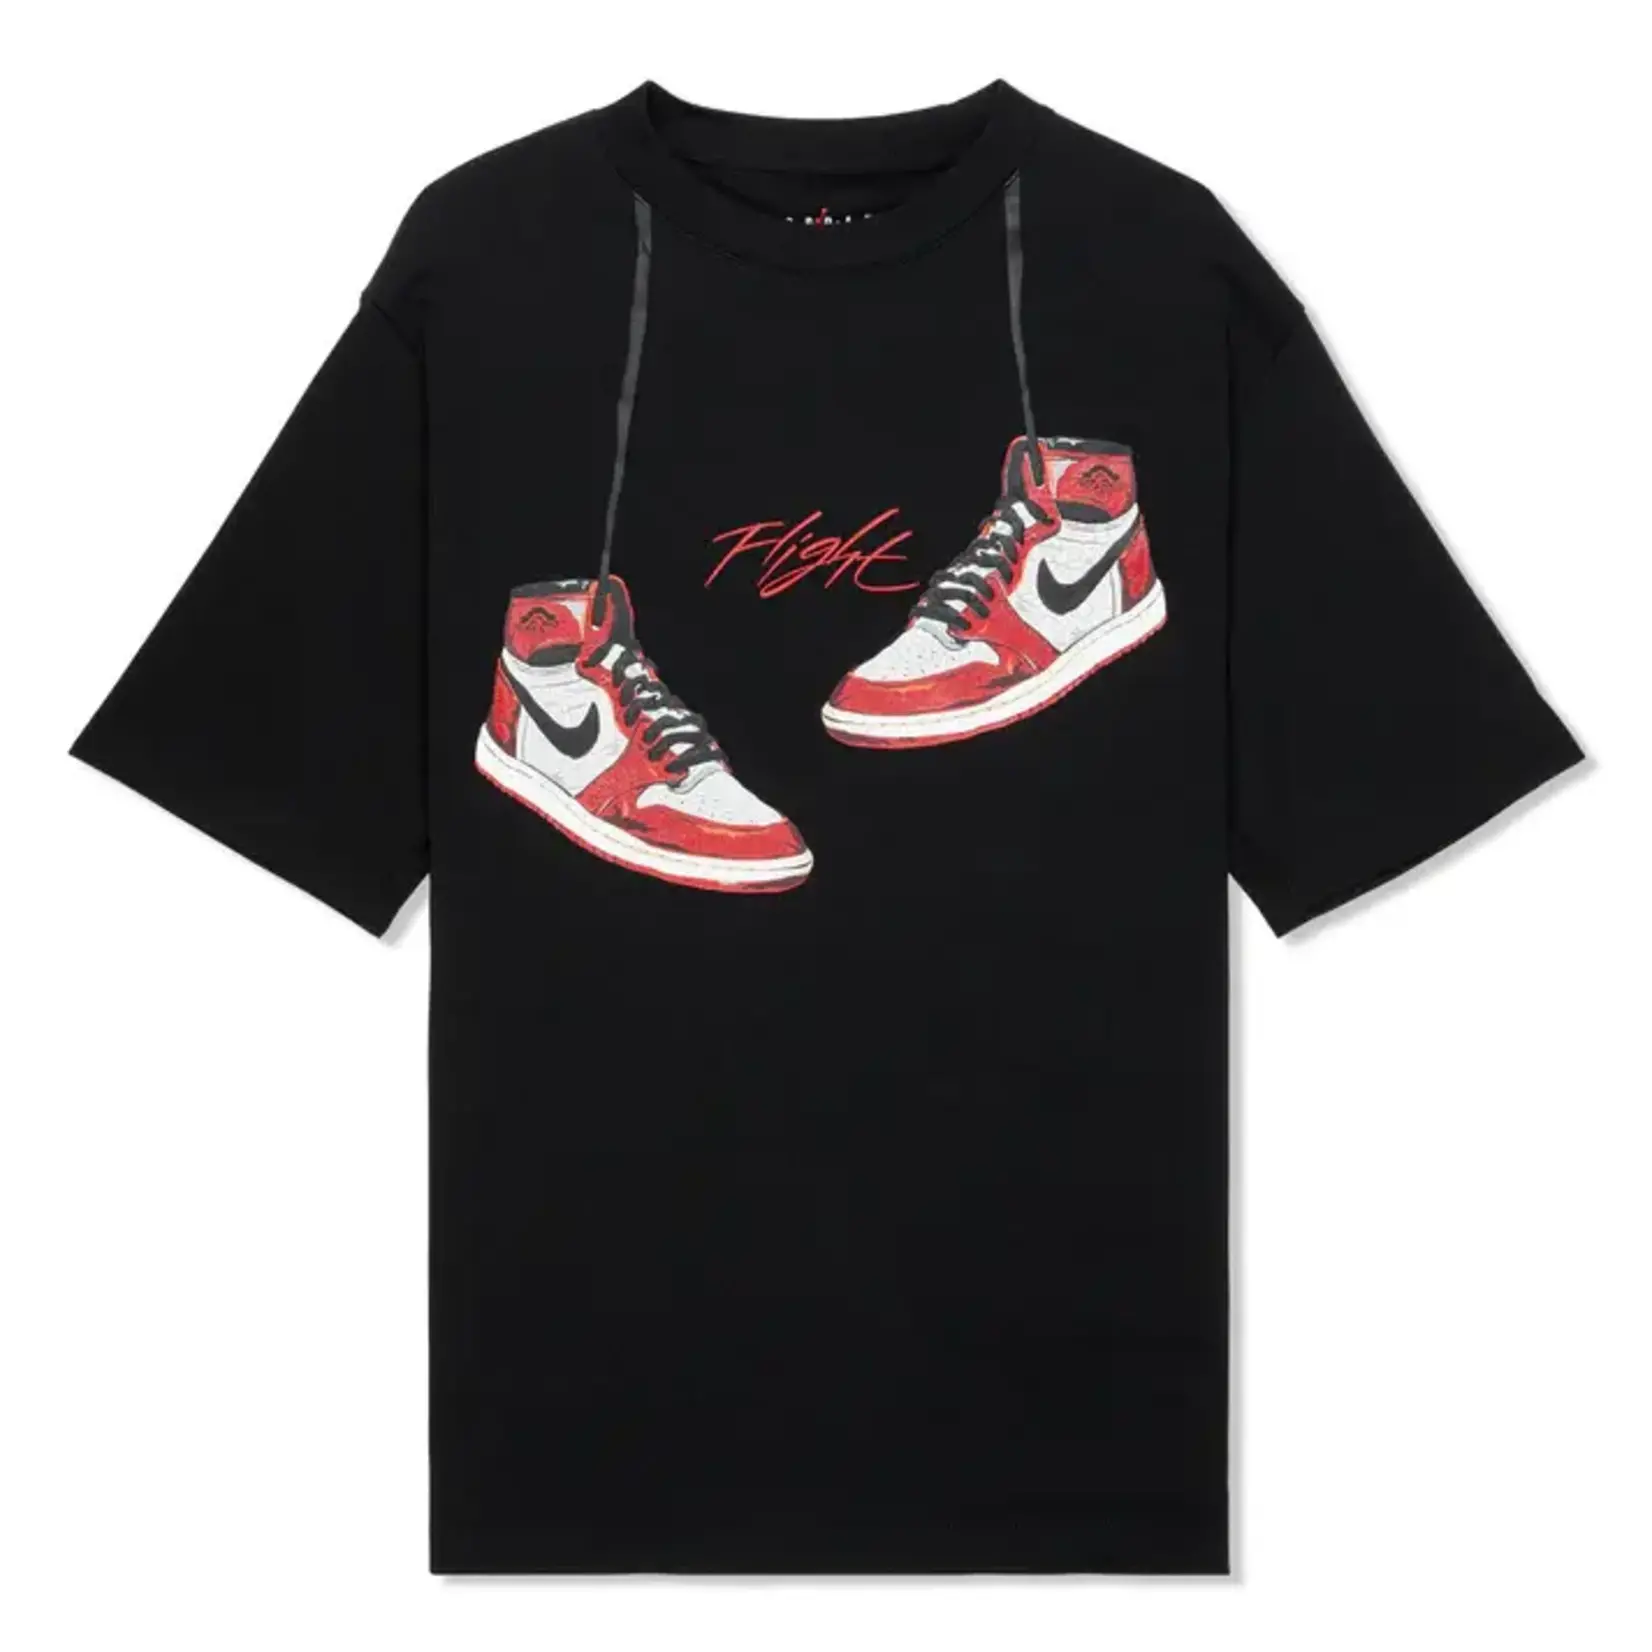 Nike Nike Air Jordan Men's Jordan 1985 Flight T-Shirt Black Size Medium, DS BRAND NEW